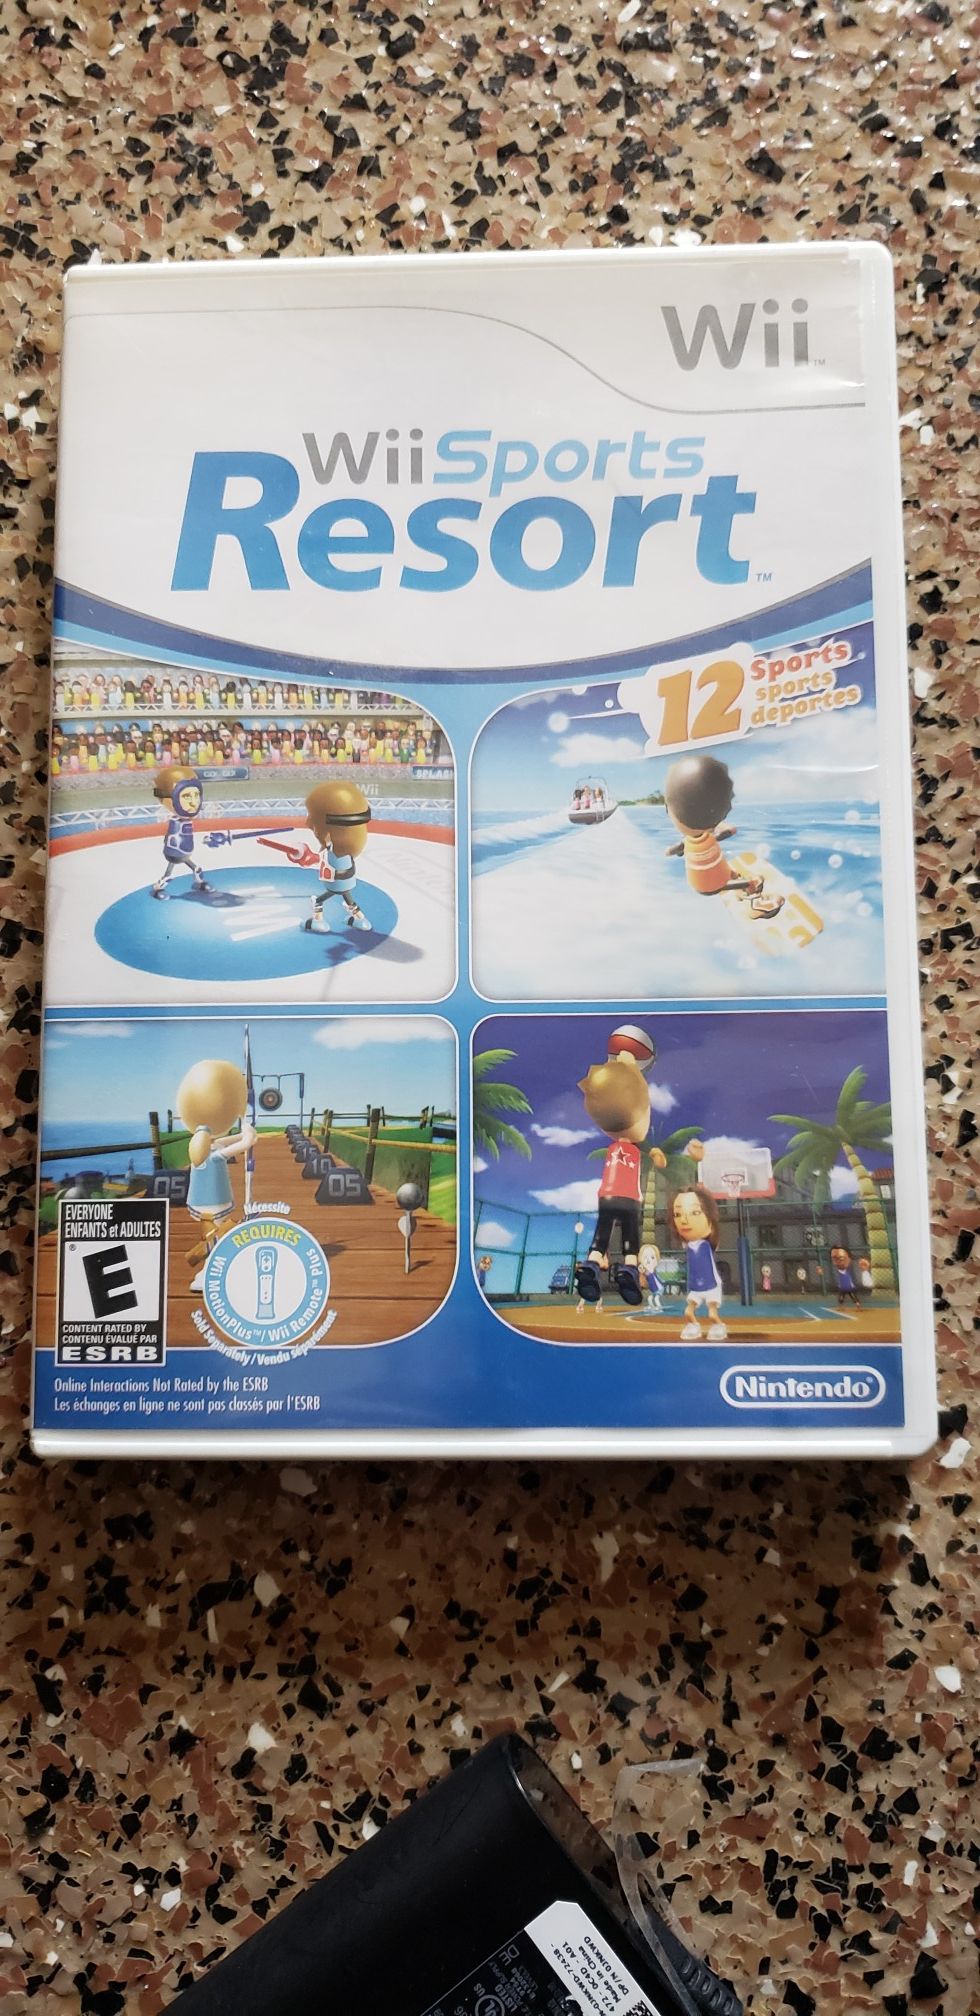 Nintendo Wii sports Resort game